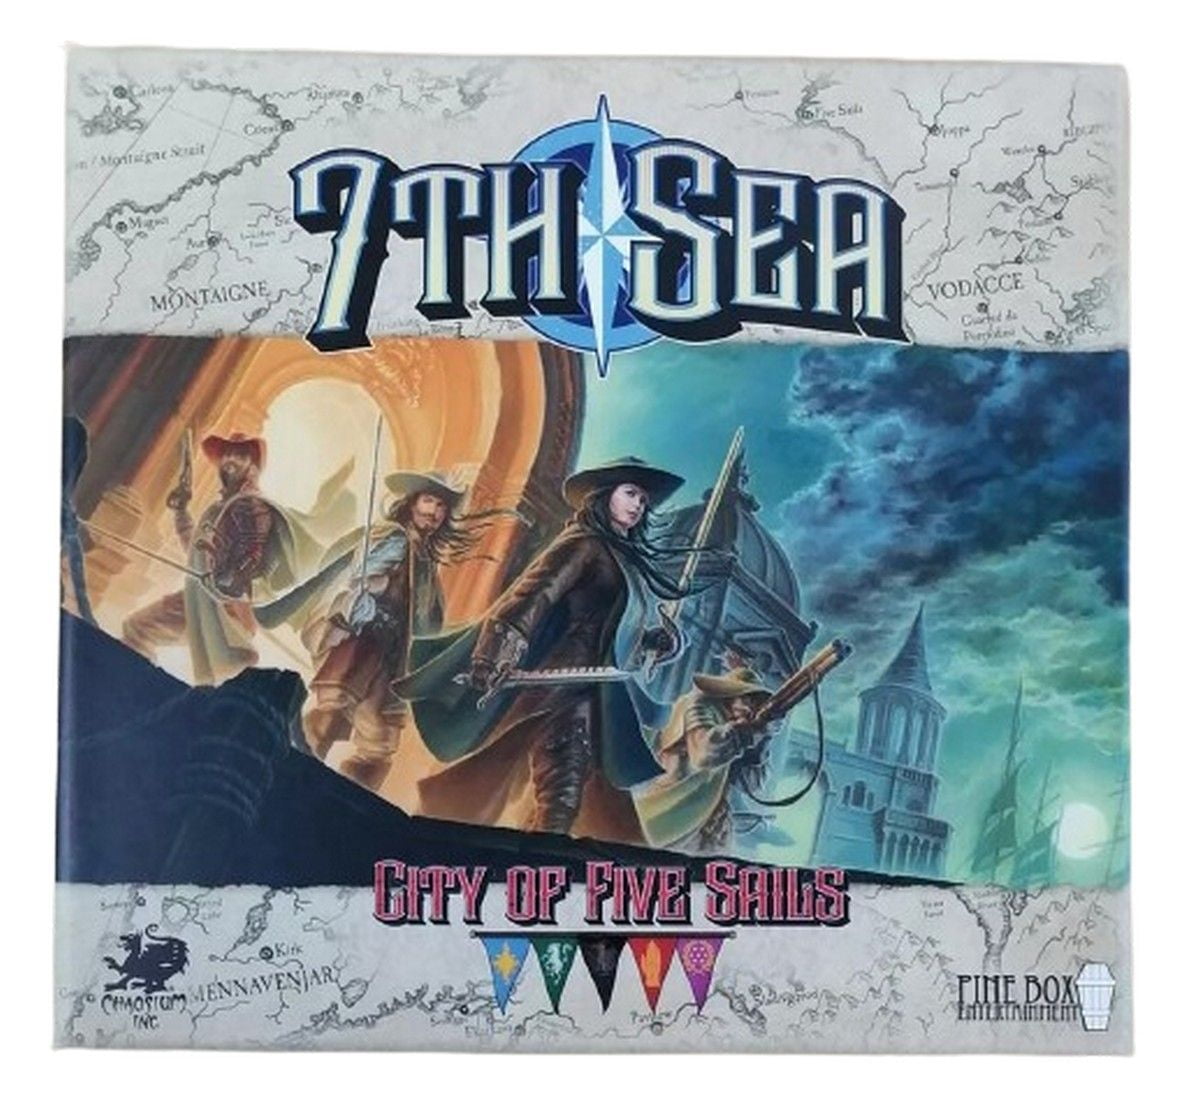 7th Sea: City Of Five Sails